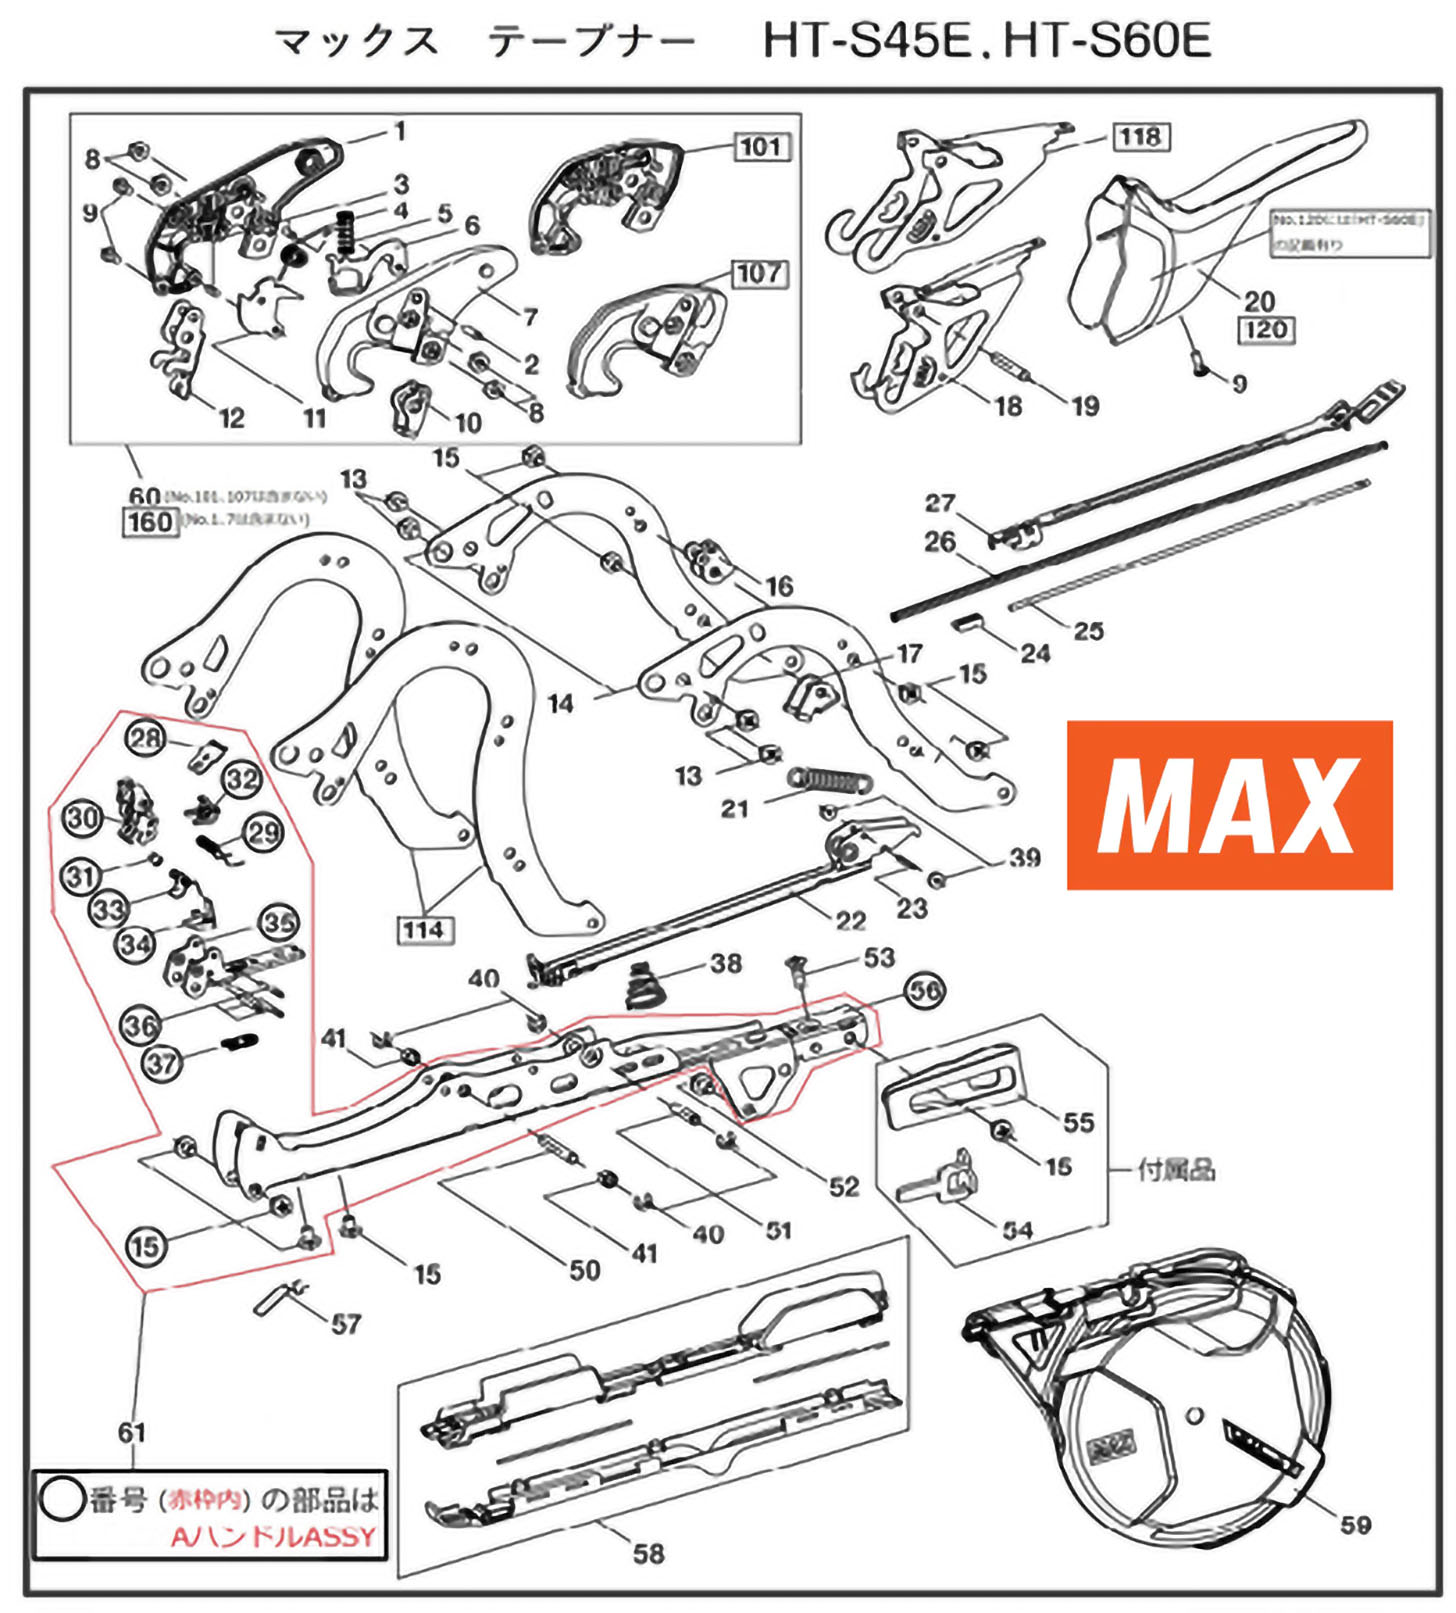 MAX Tapener Part AA05722 SCREW BIND 4x8(P) Fits MAX HT-S45E #52